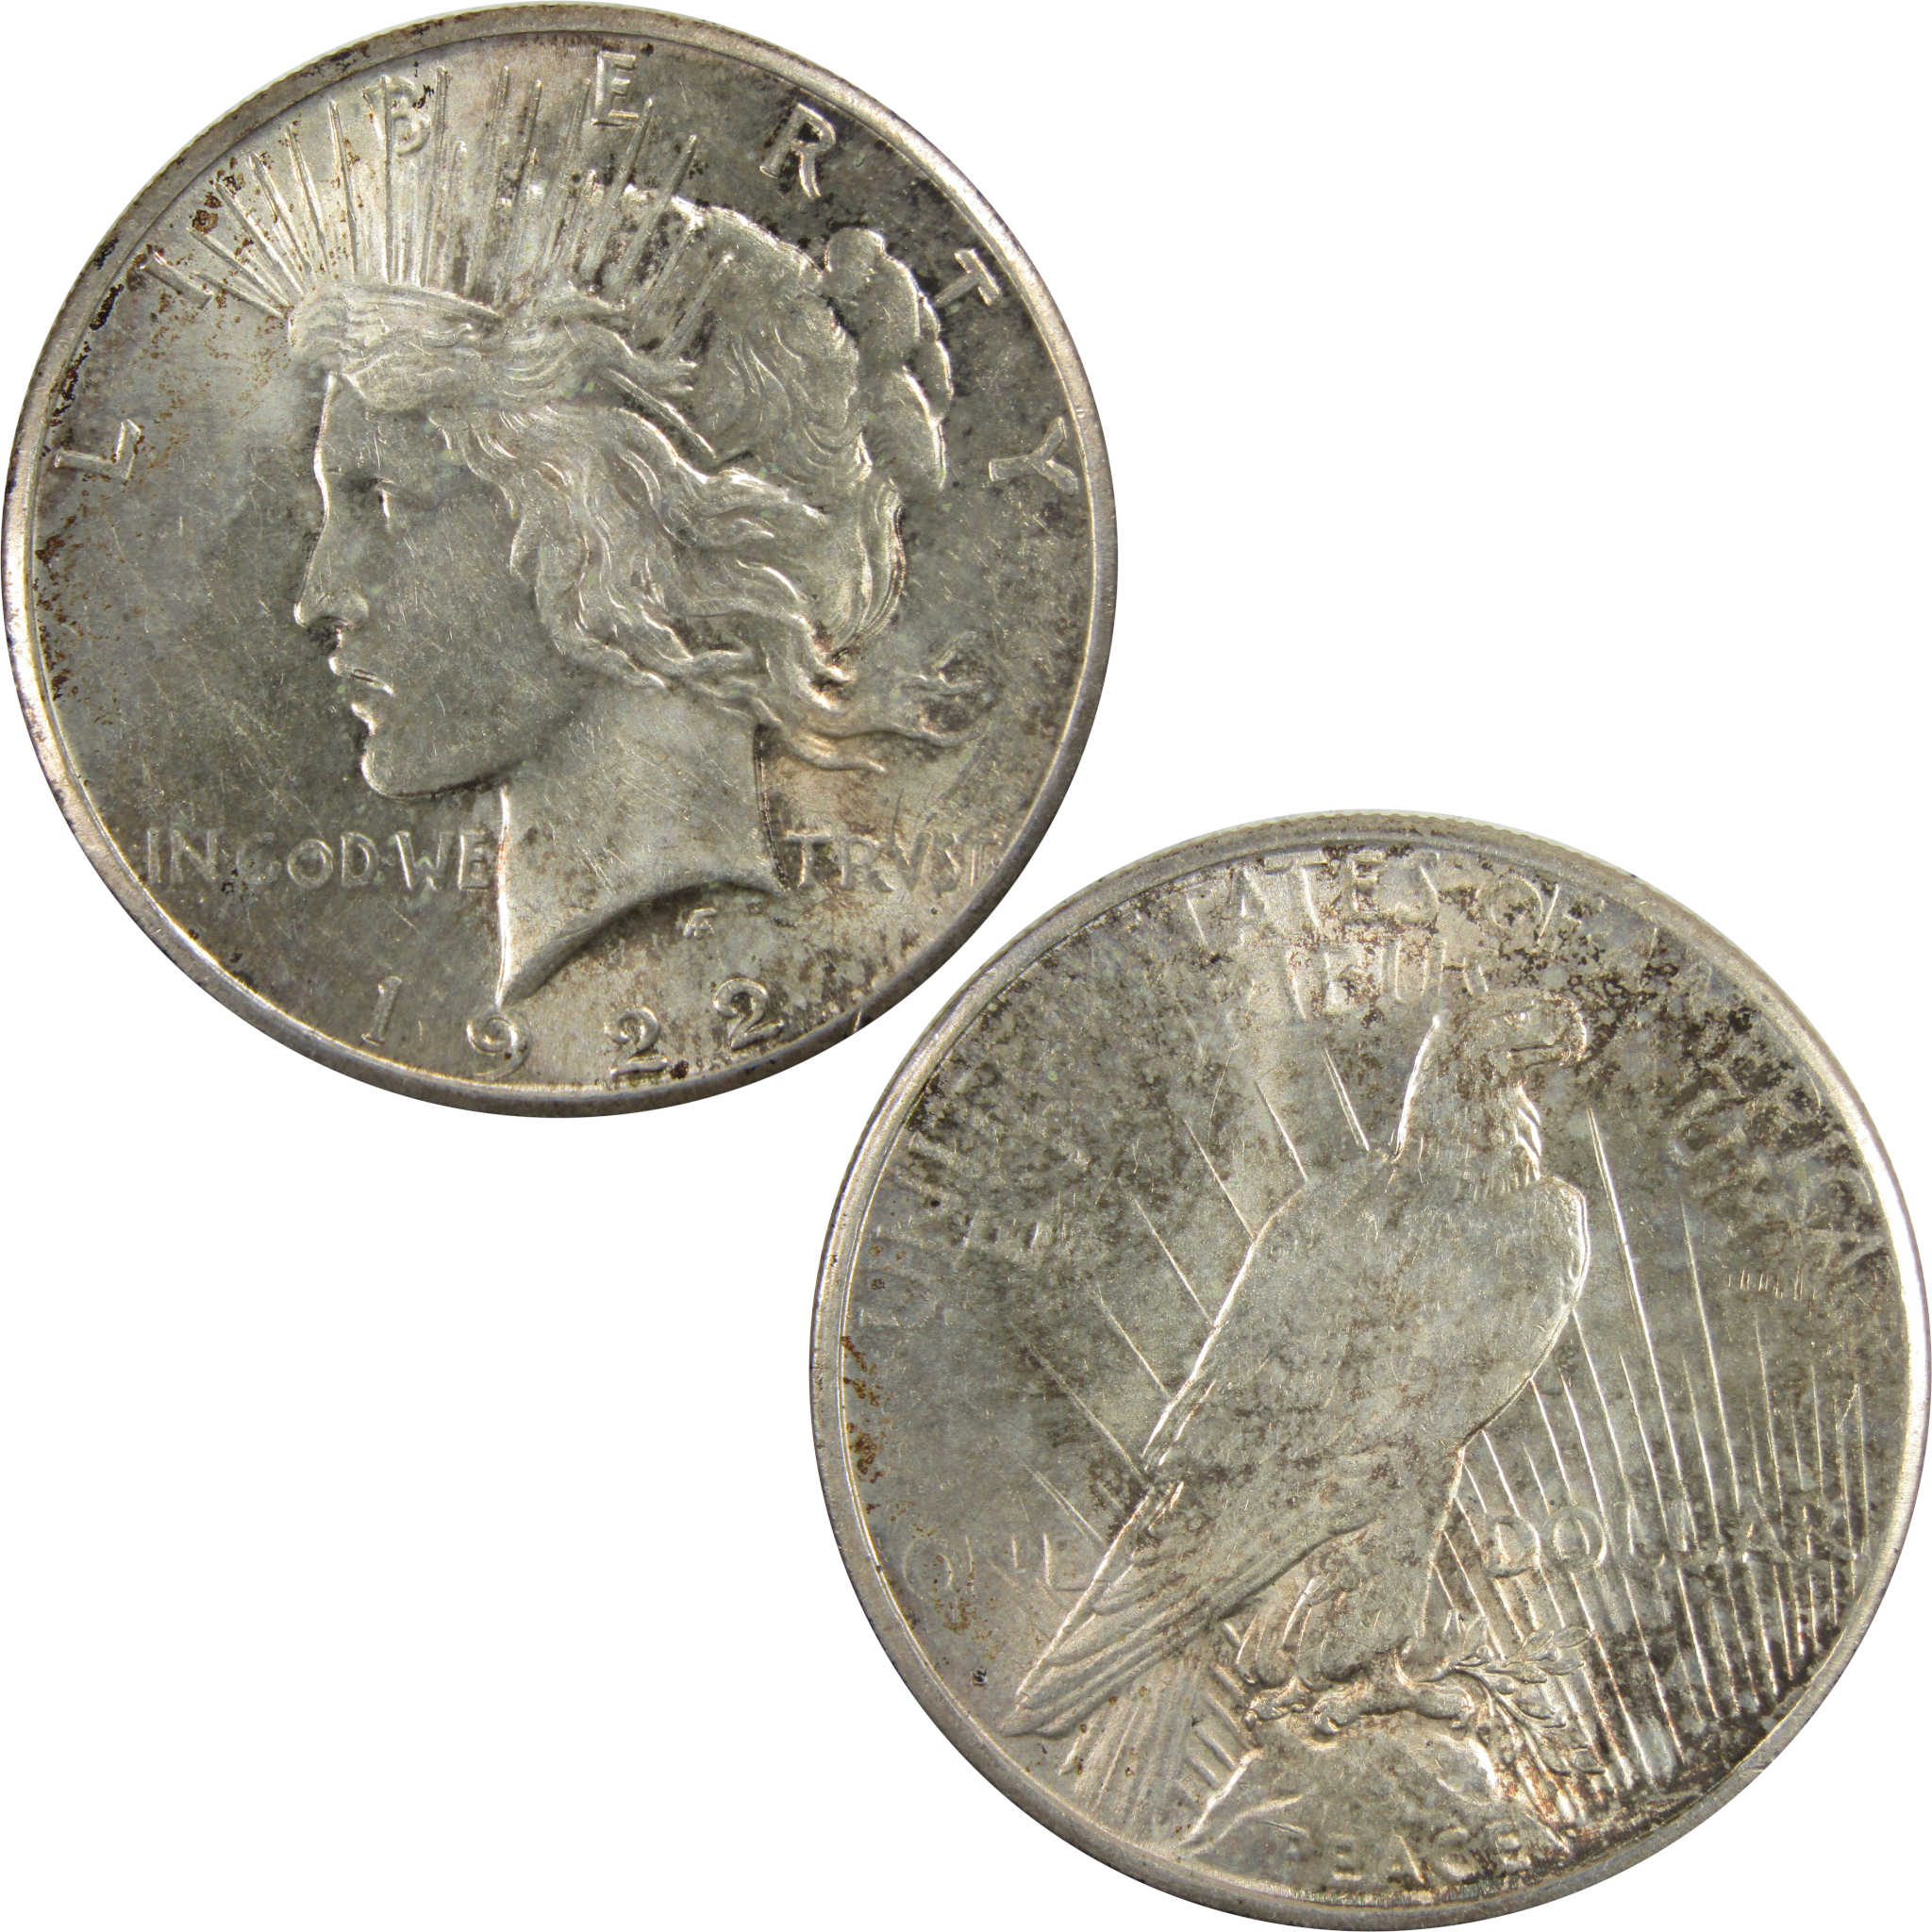 1922 S Peace Dollar Borderline Uncirculated Silver $1 Coin SKU:I5599